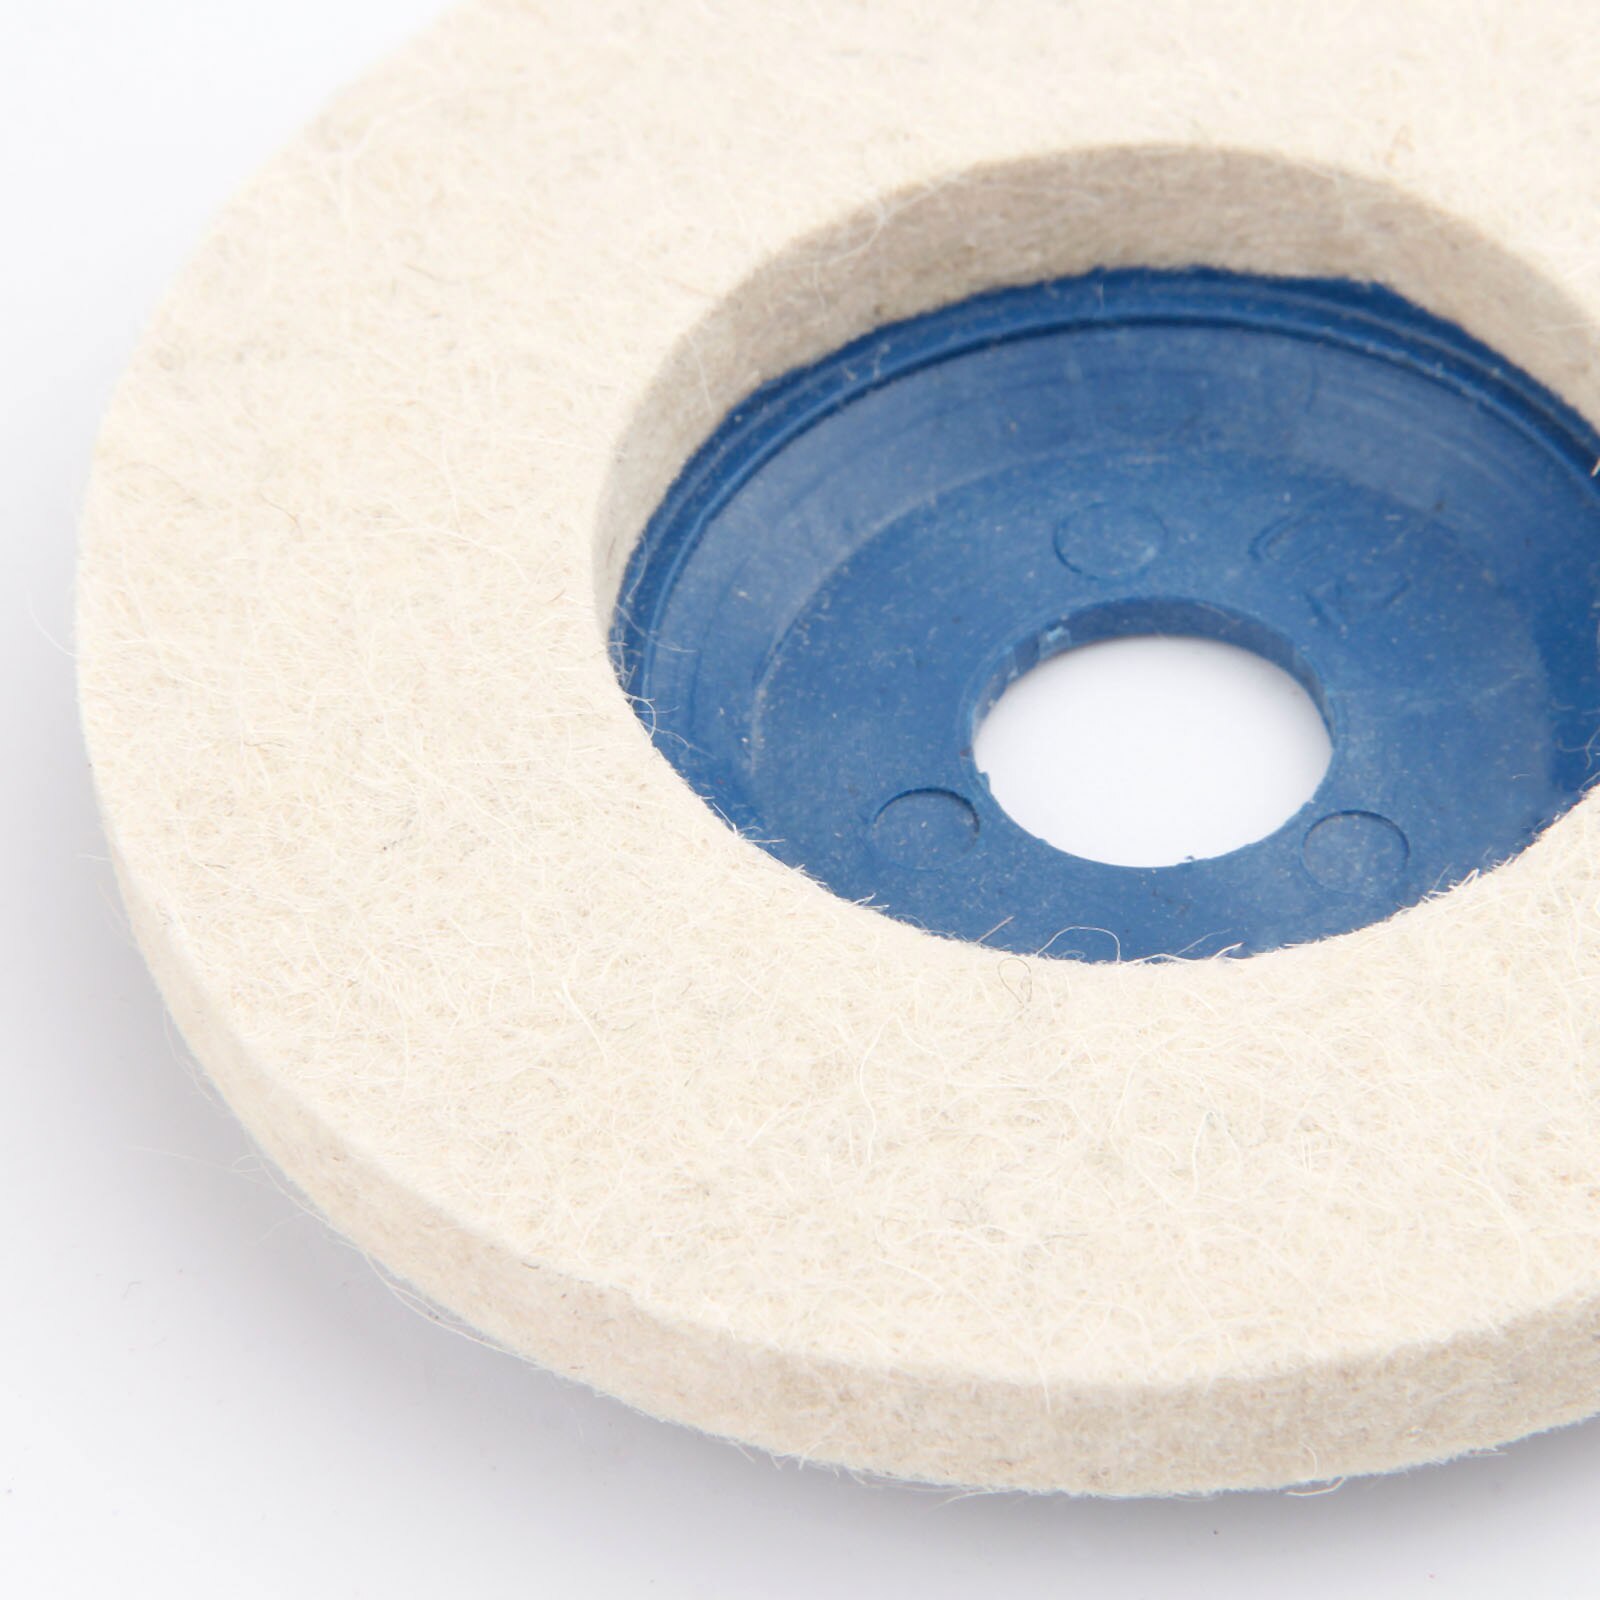 1x 100mm Wool Polishing Wheel Buffing Pads Angle Grinder Wheel Felt Polishing Disc Polisher For Ceramic Metal Glass Plastic